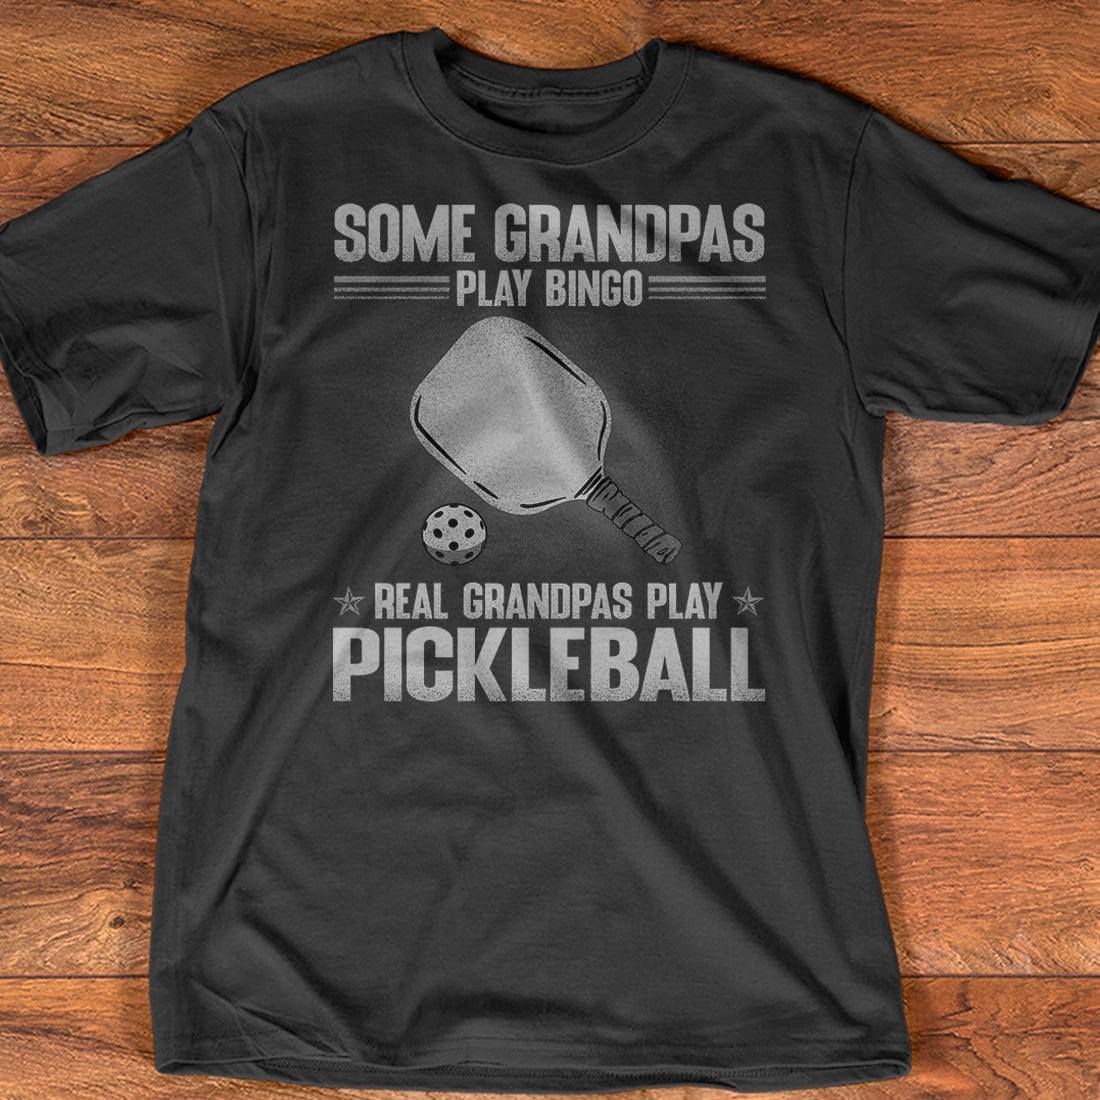 Some grandpas play bingo real grandpas play pickleball